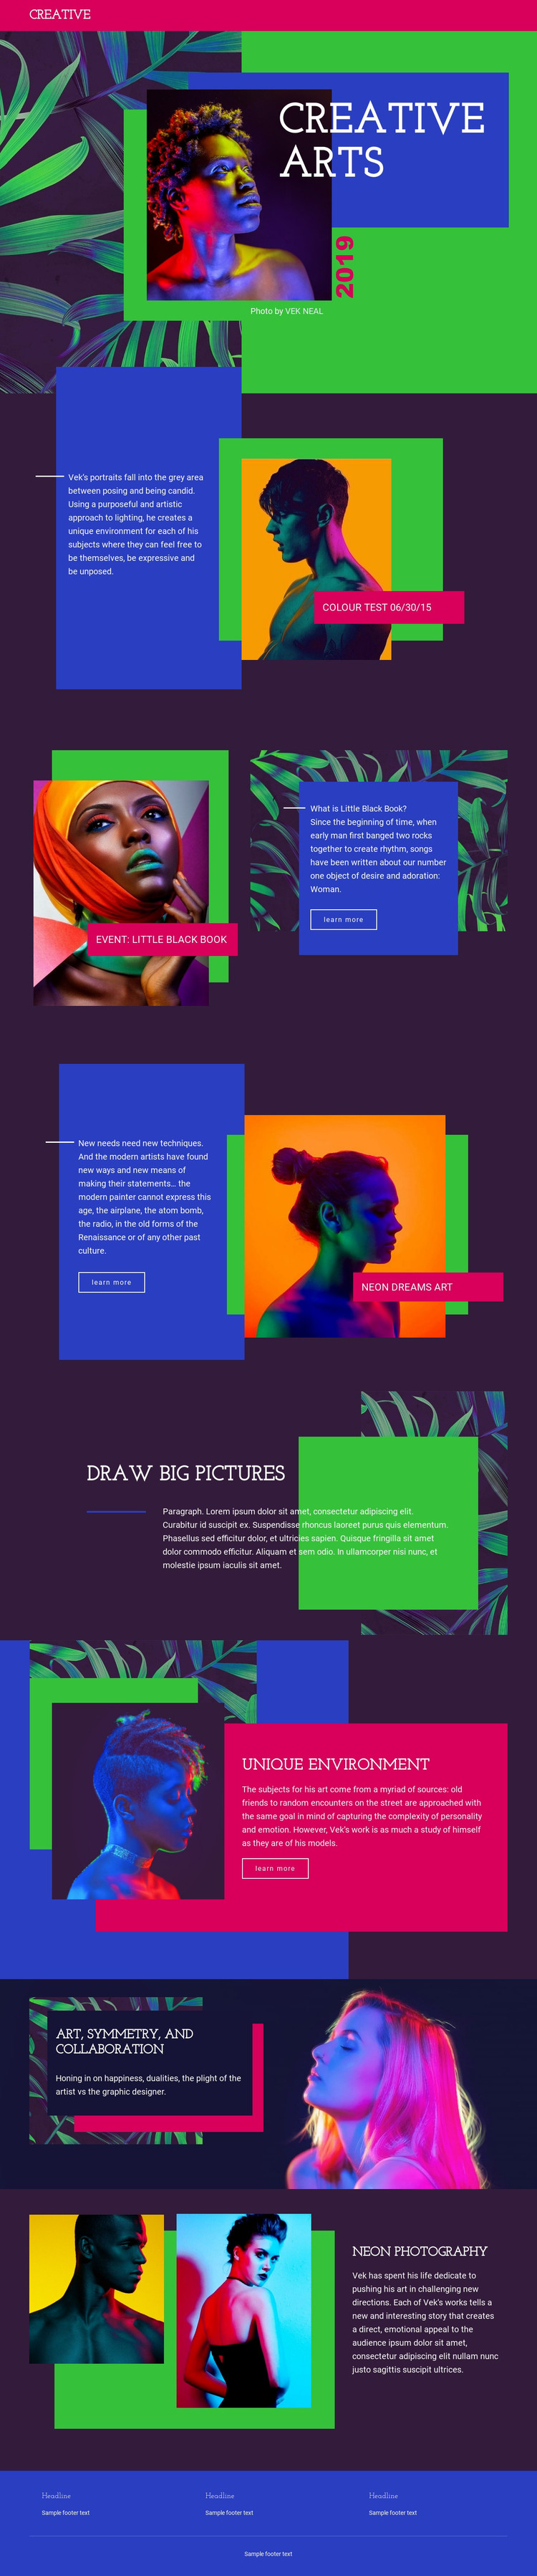 Creative Art Ideas Homepage Design